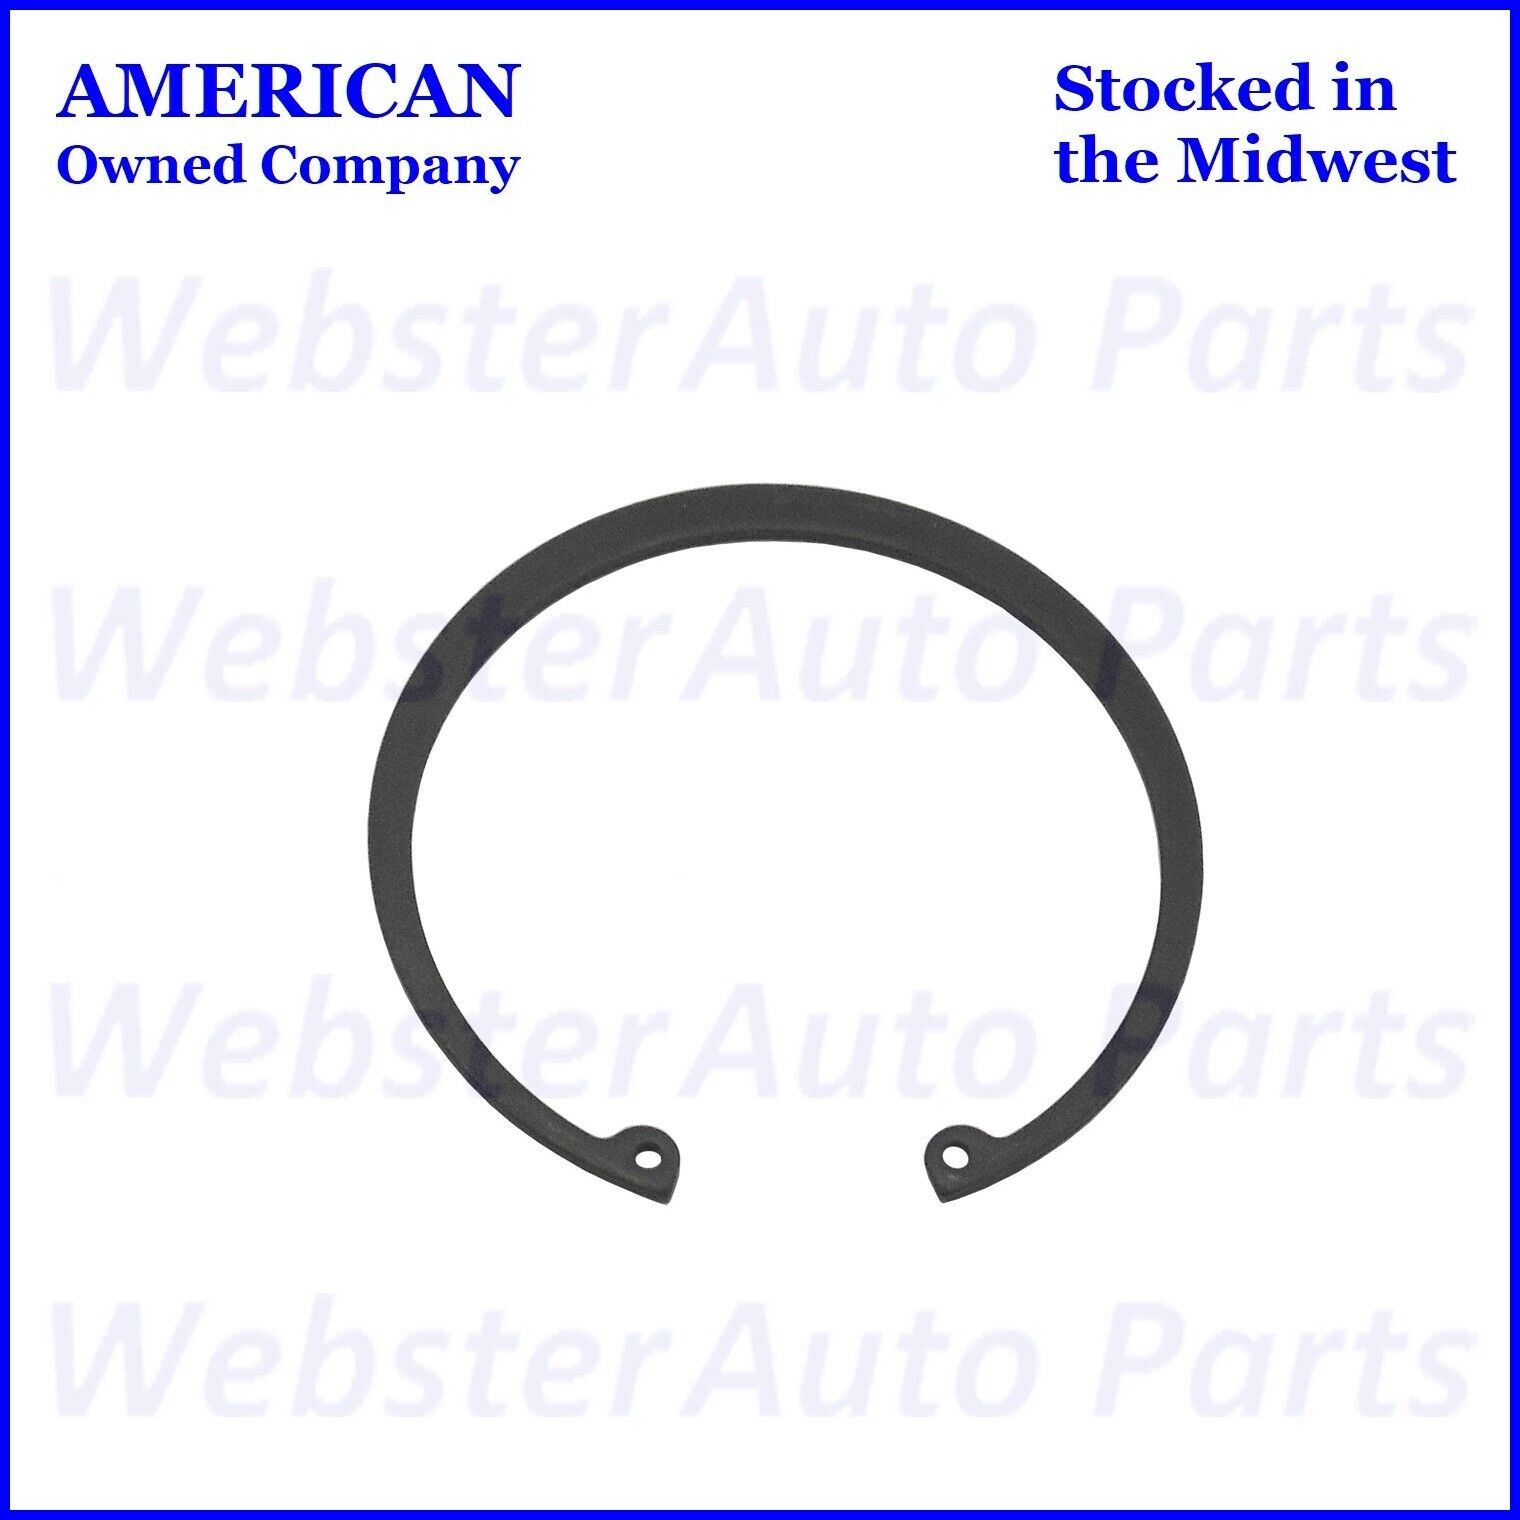 pop Netelig Hinder Front Wheel Bearing Retaining Ring for Ford F-150 and Lincoln Mark LT | eBay